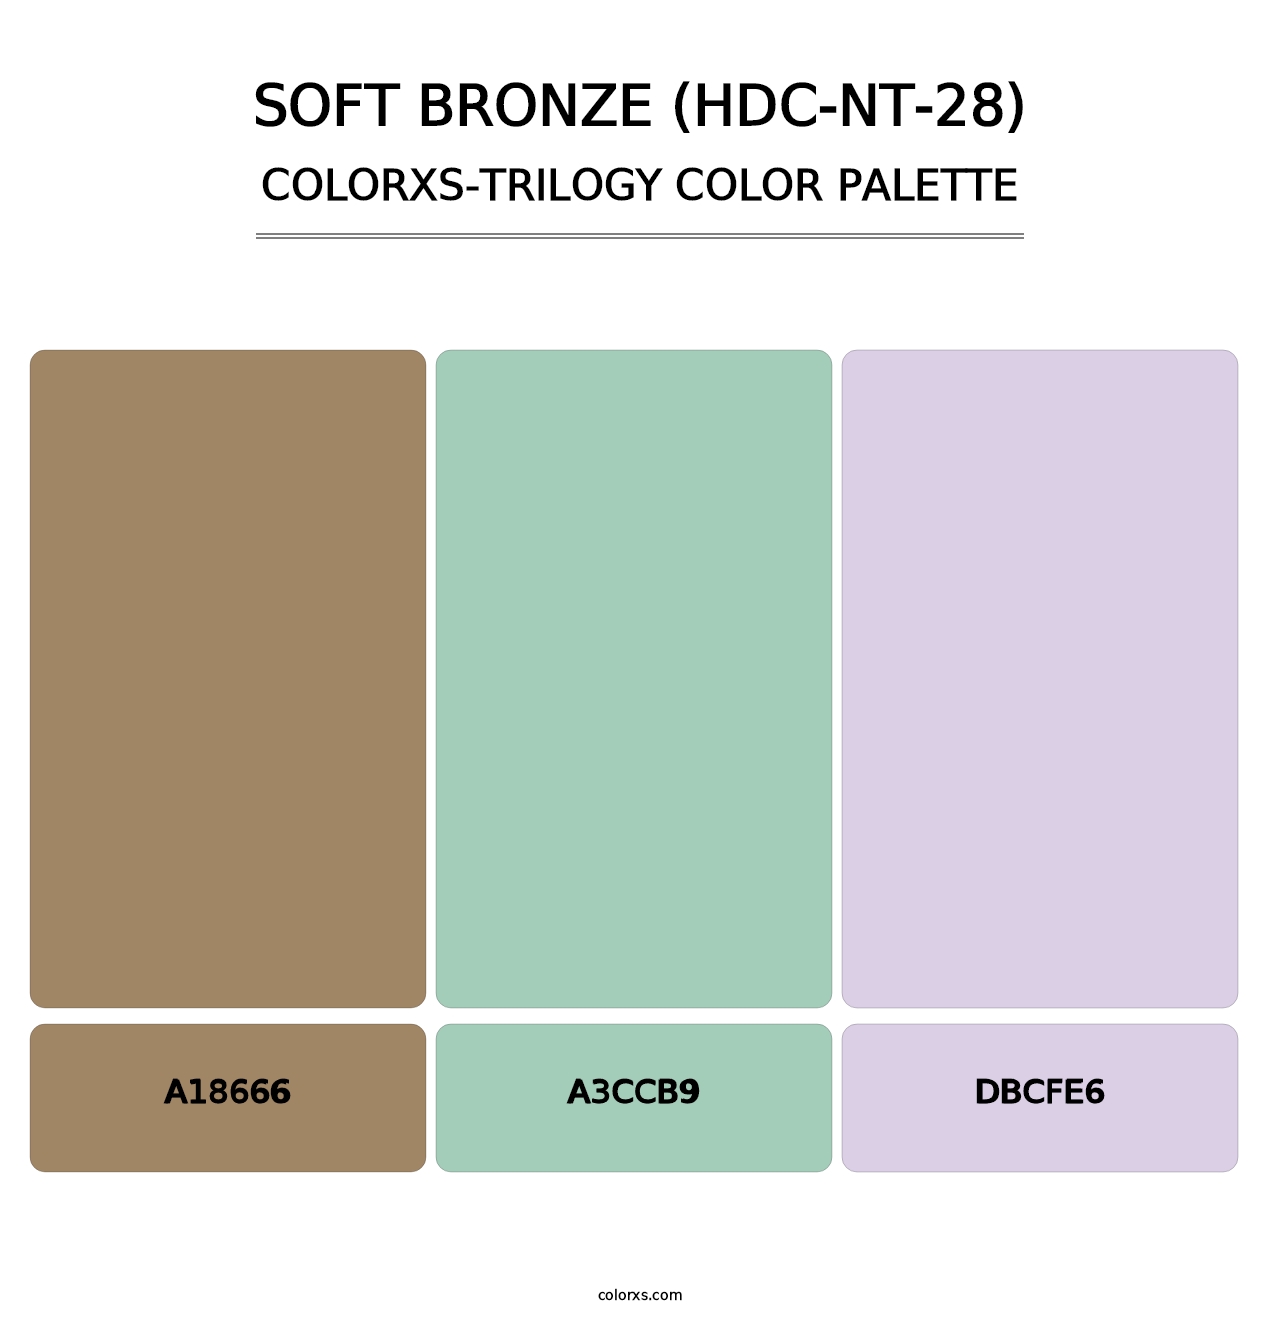 Soft Bronze (HDC-NT-28) - Colorxs Trilogy Palette